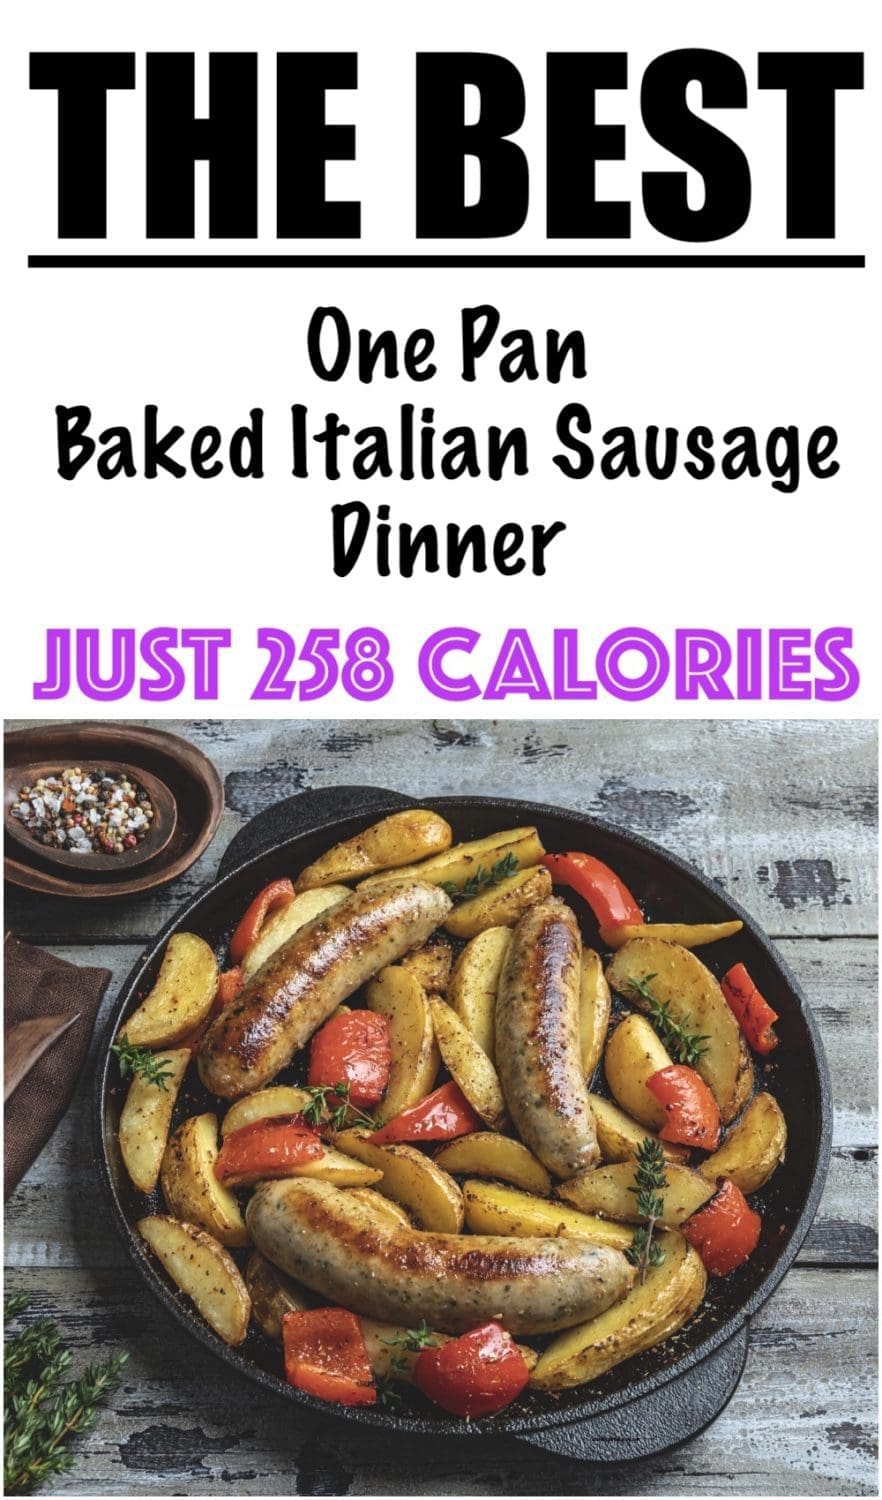 One Pan Baked Italian Sausage Dinner